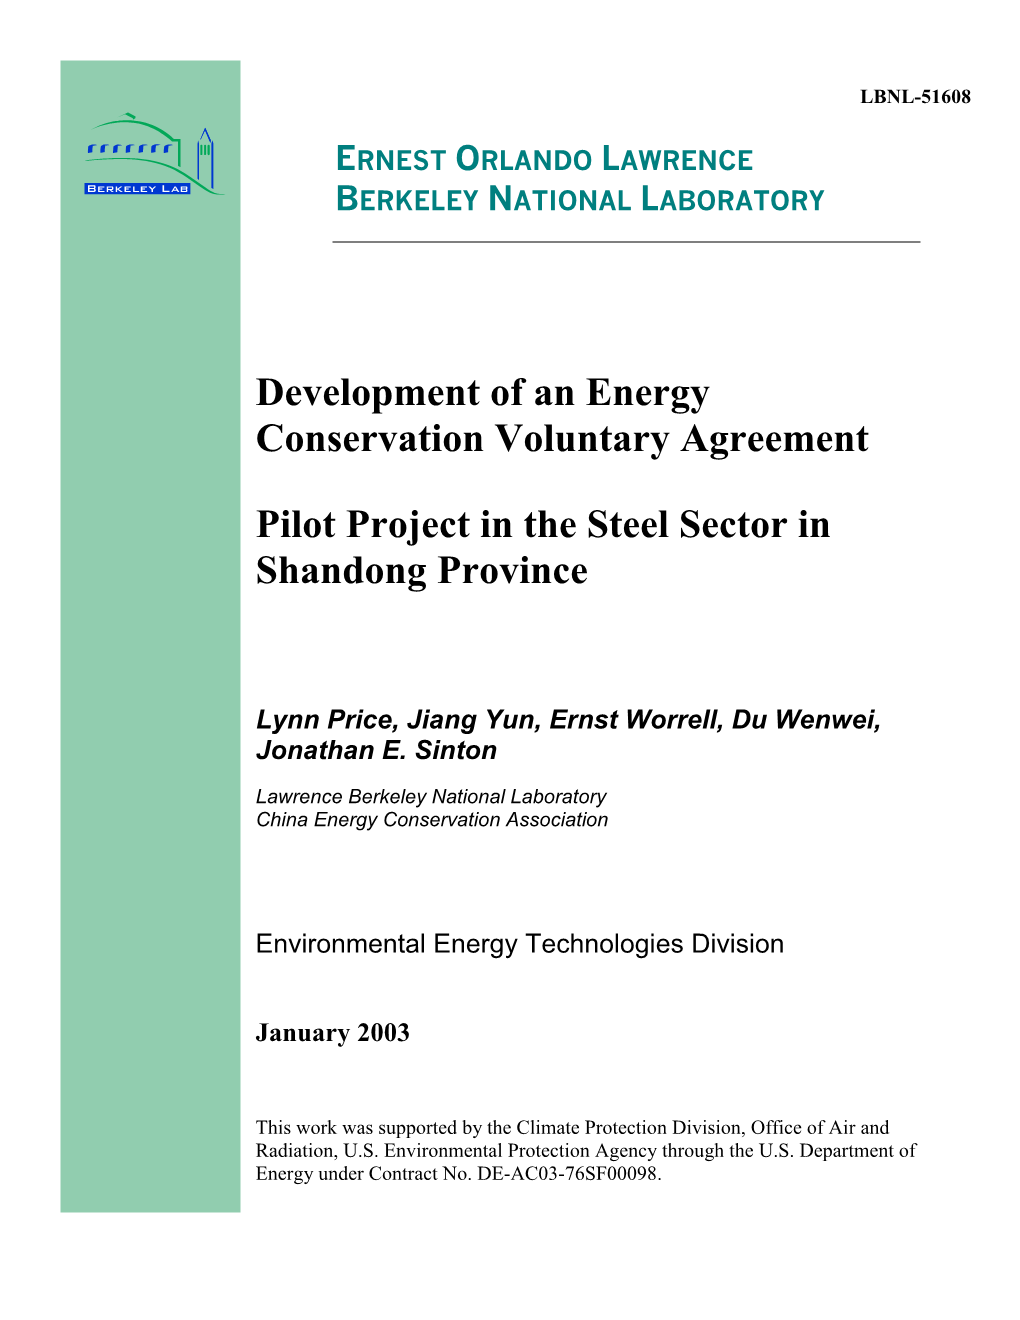 Development of an Energy Conservation Voluntary Agreement